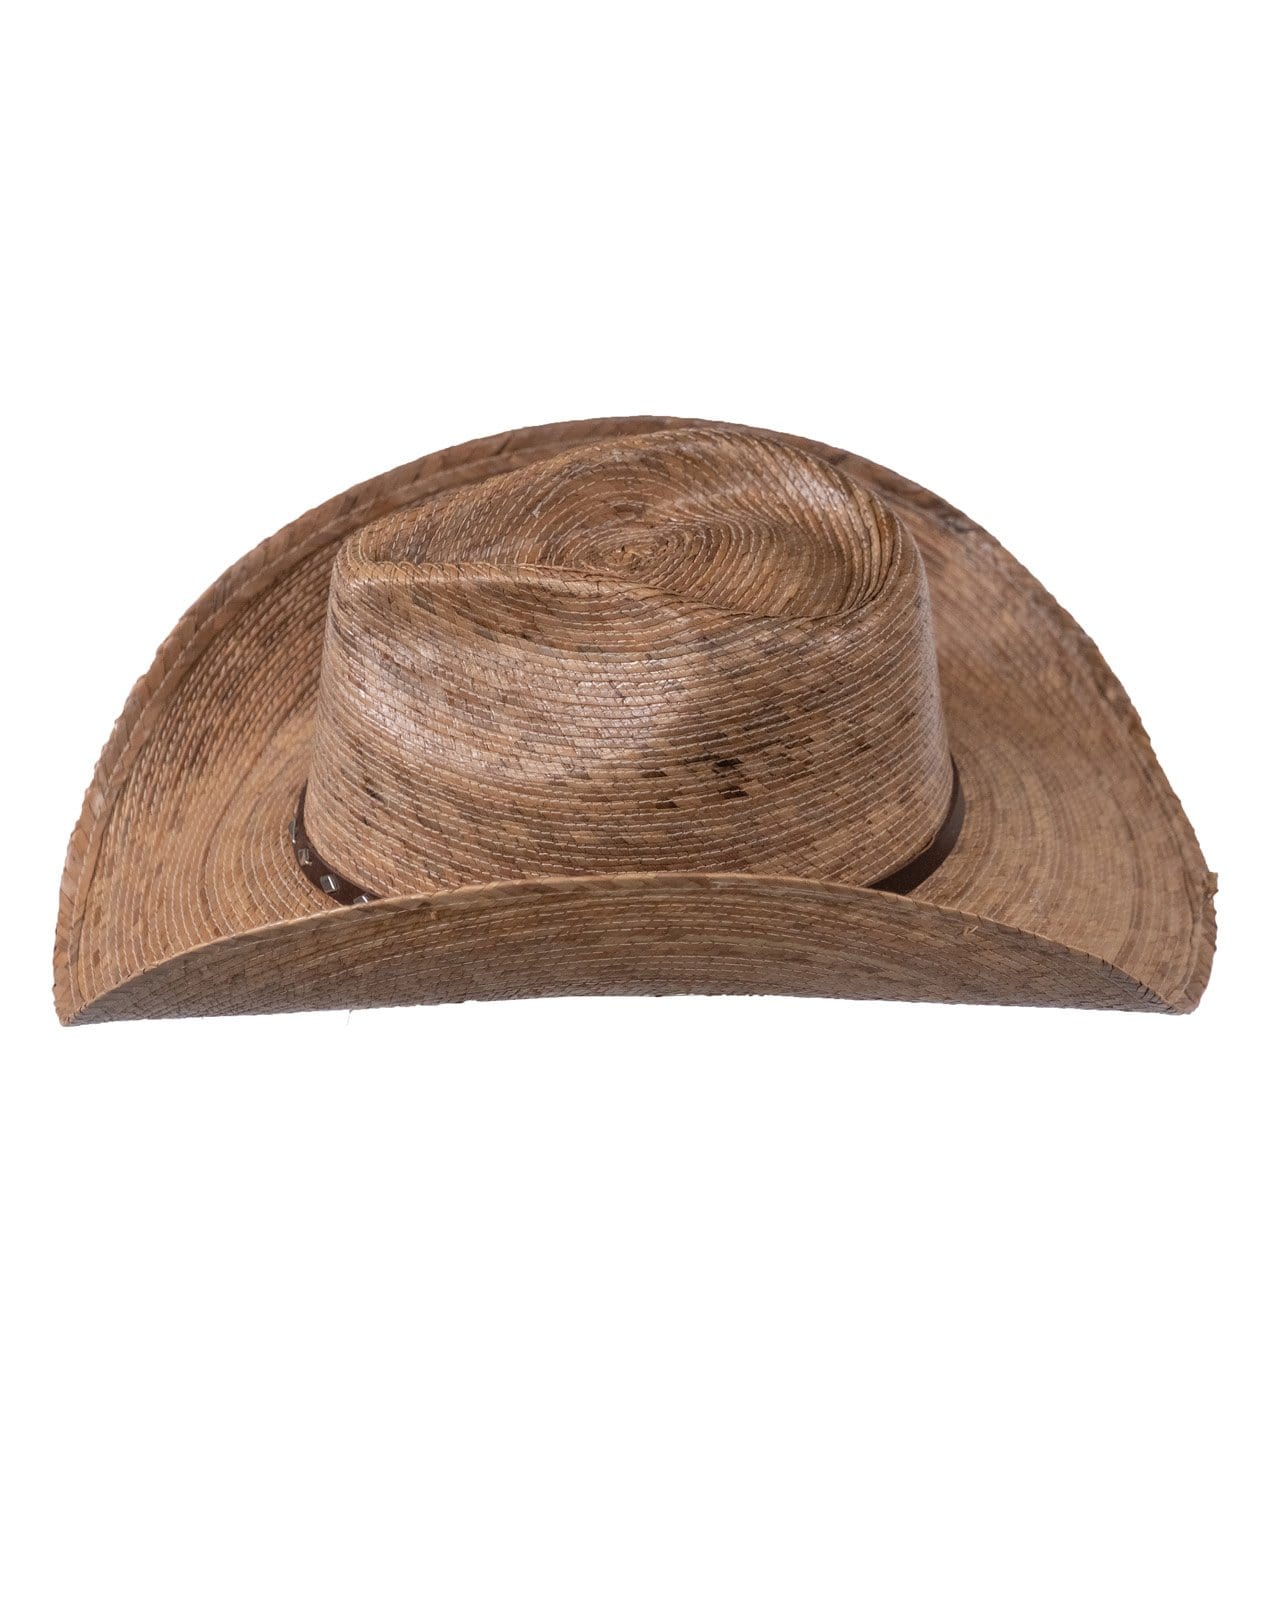 Outback Trading Company Carlsbad Hats